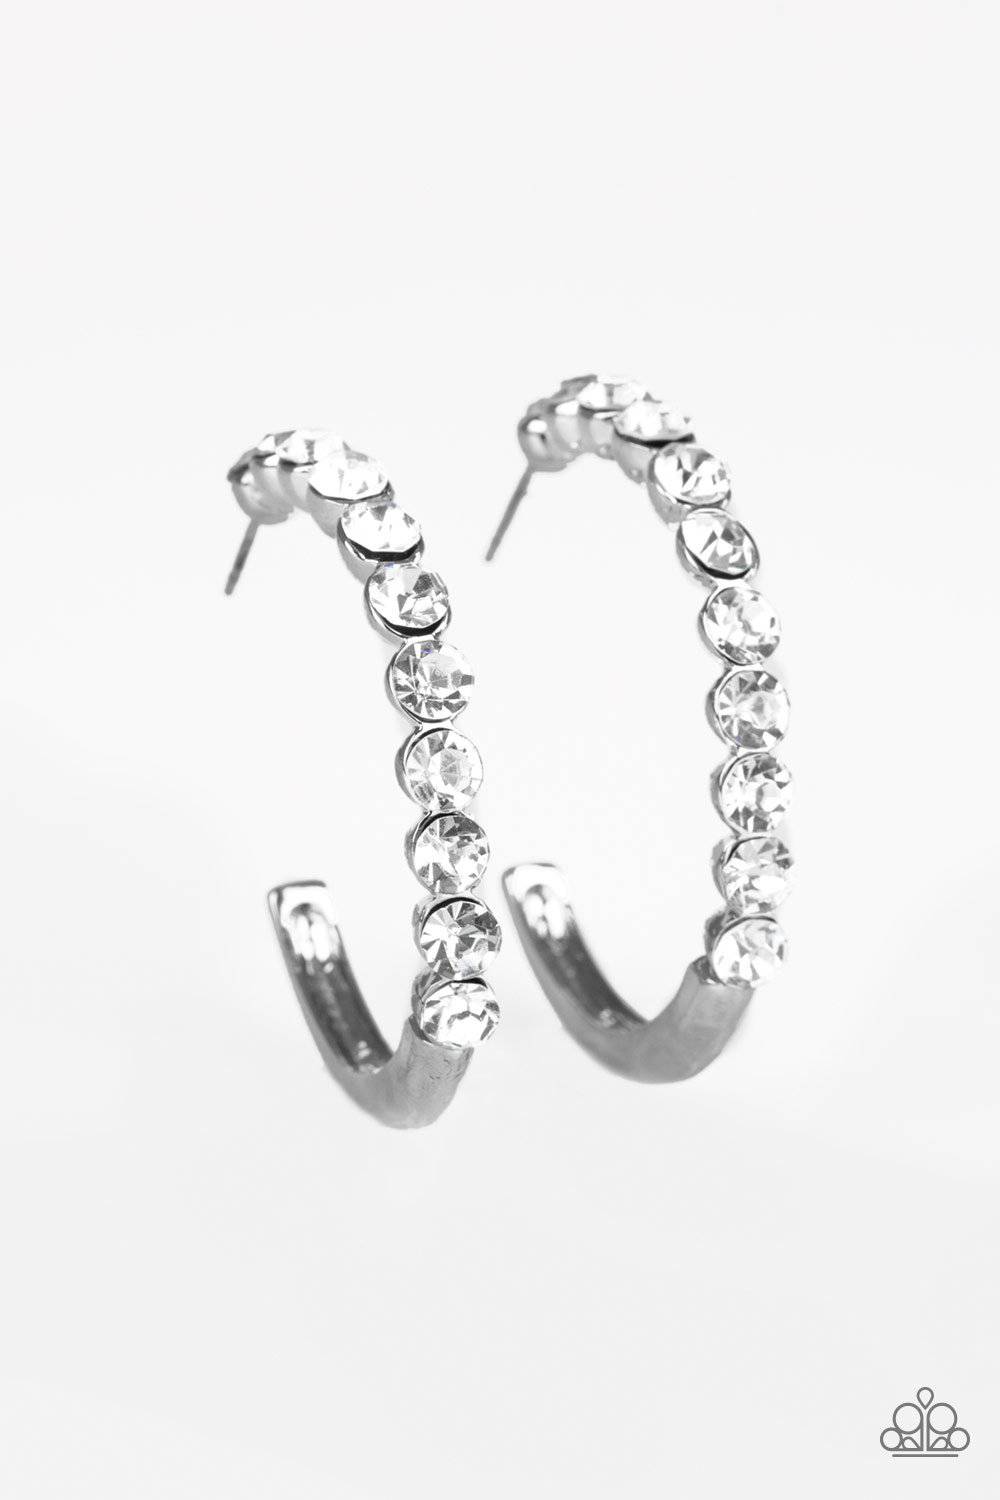 My Kind Of Shine - White Rhinestone Earrings - Paparazzi Accessories - GlaMarous Titi Jewels